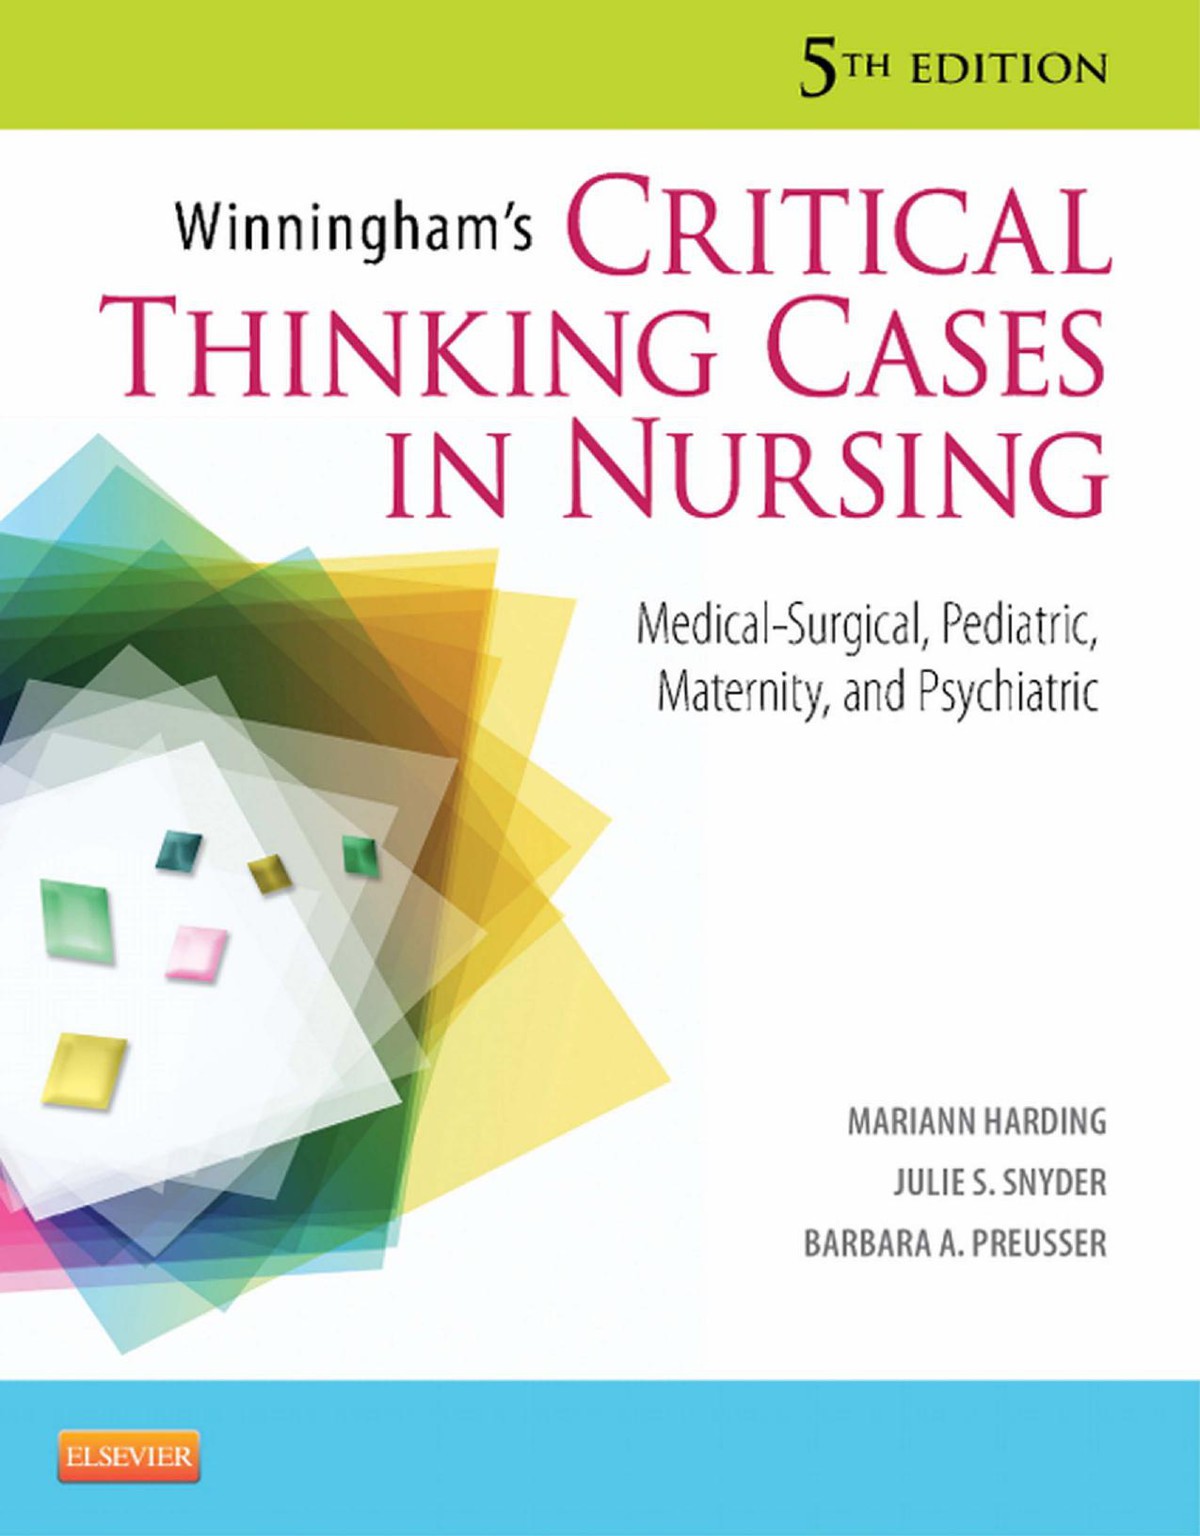 critical thinking nursing articles